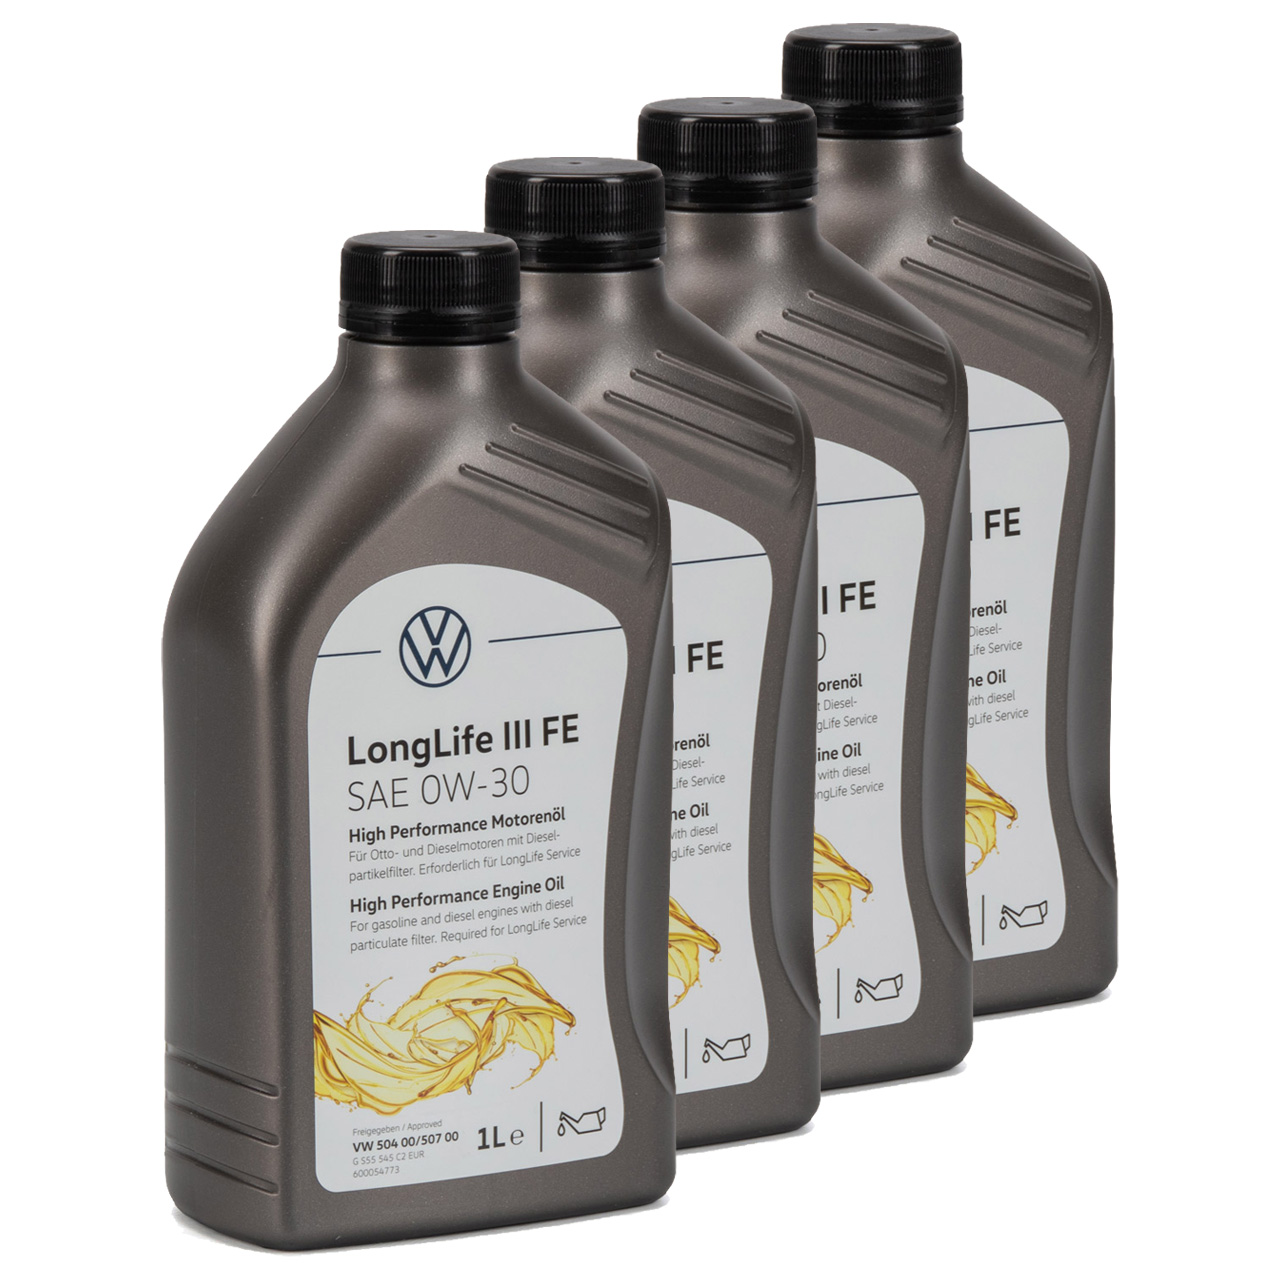 4L 4 Liter ORIGINAL VW Motoröl Öl 0W-30 LONGLIFE III FE 504.00 507.00 GS55545C2